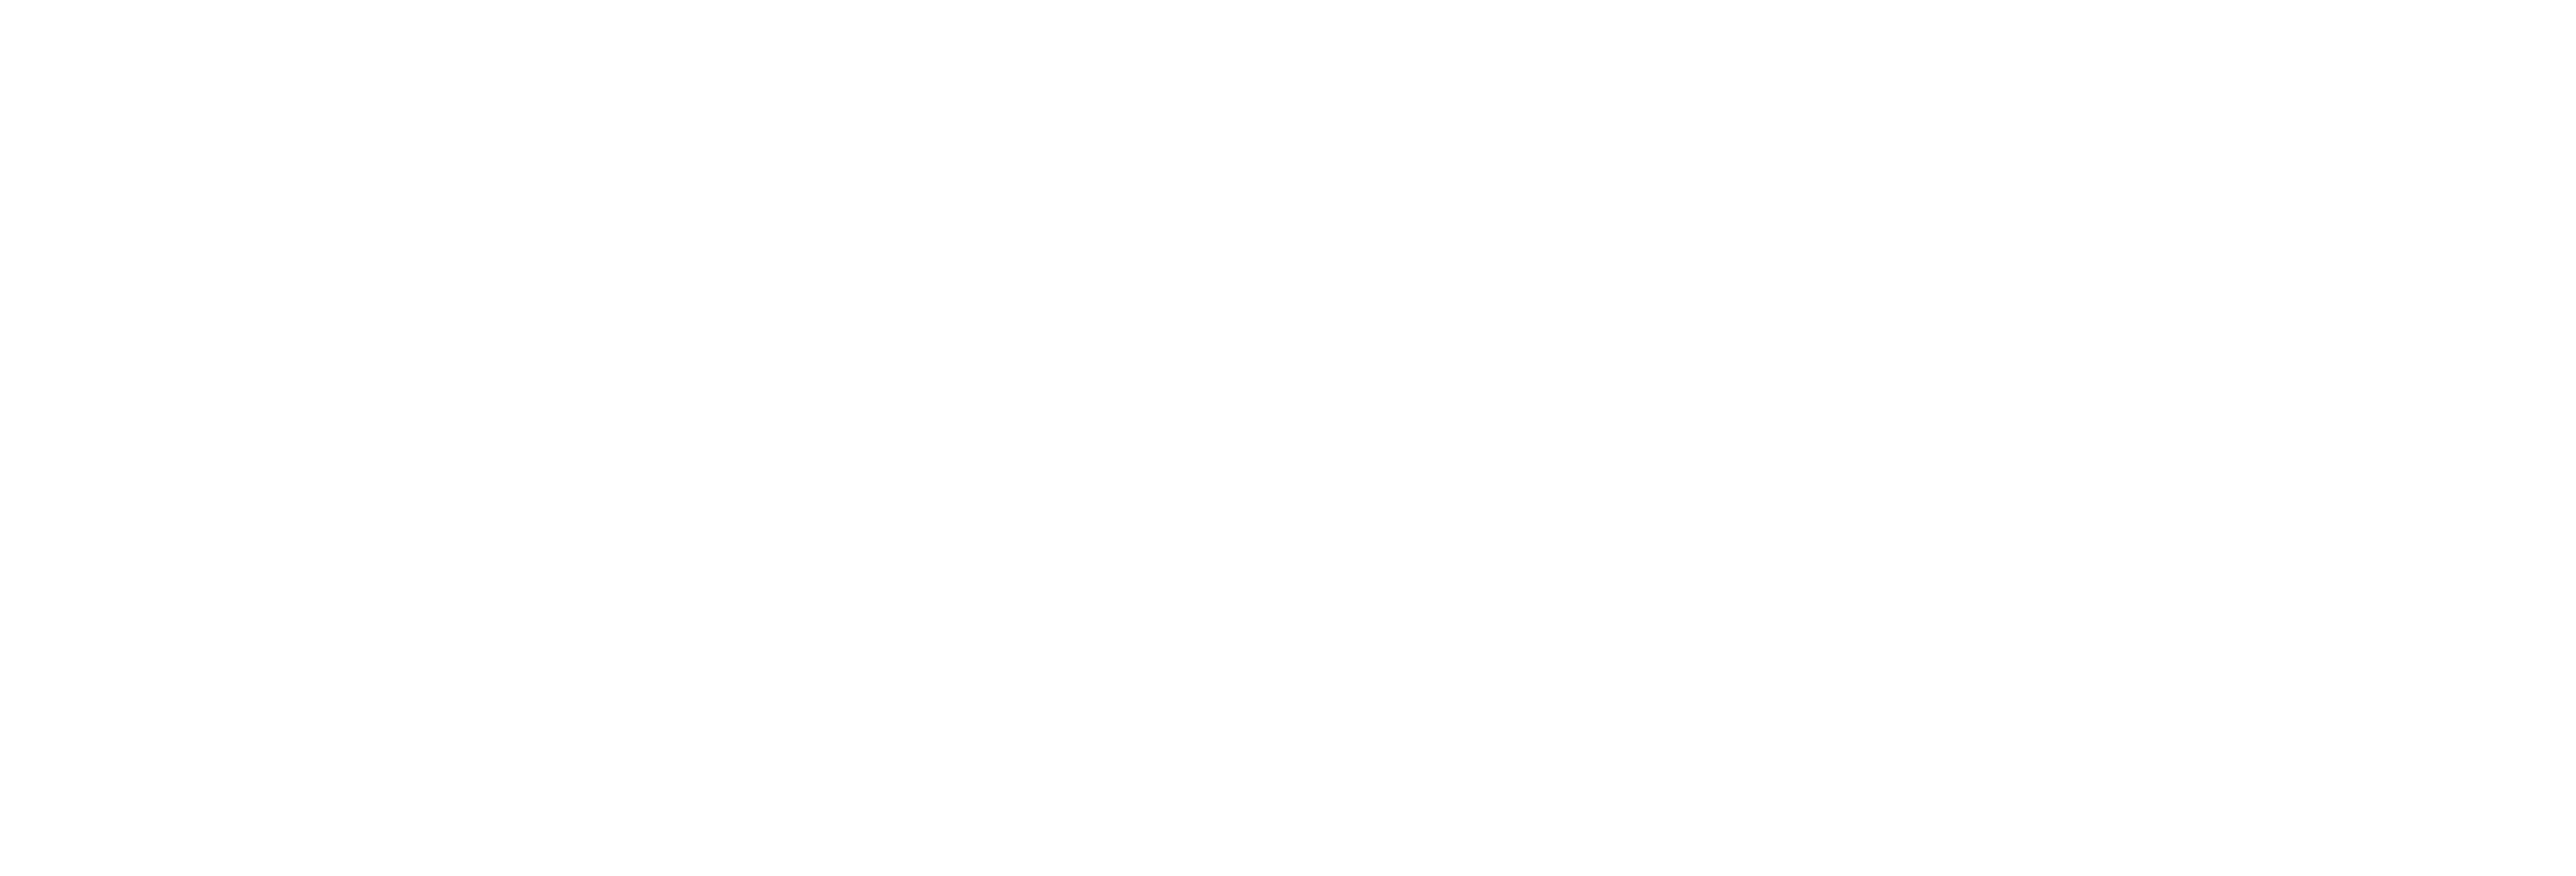 City of Center, Missouri